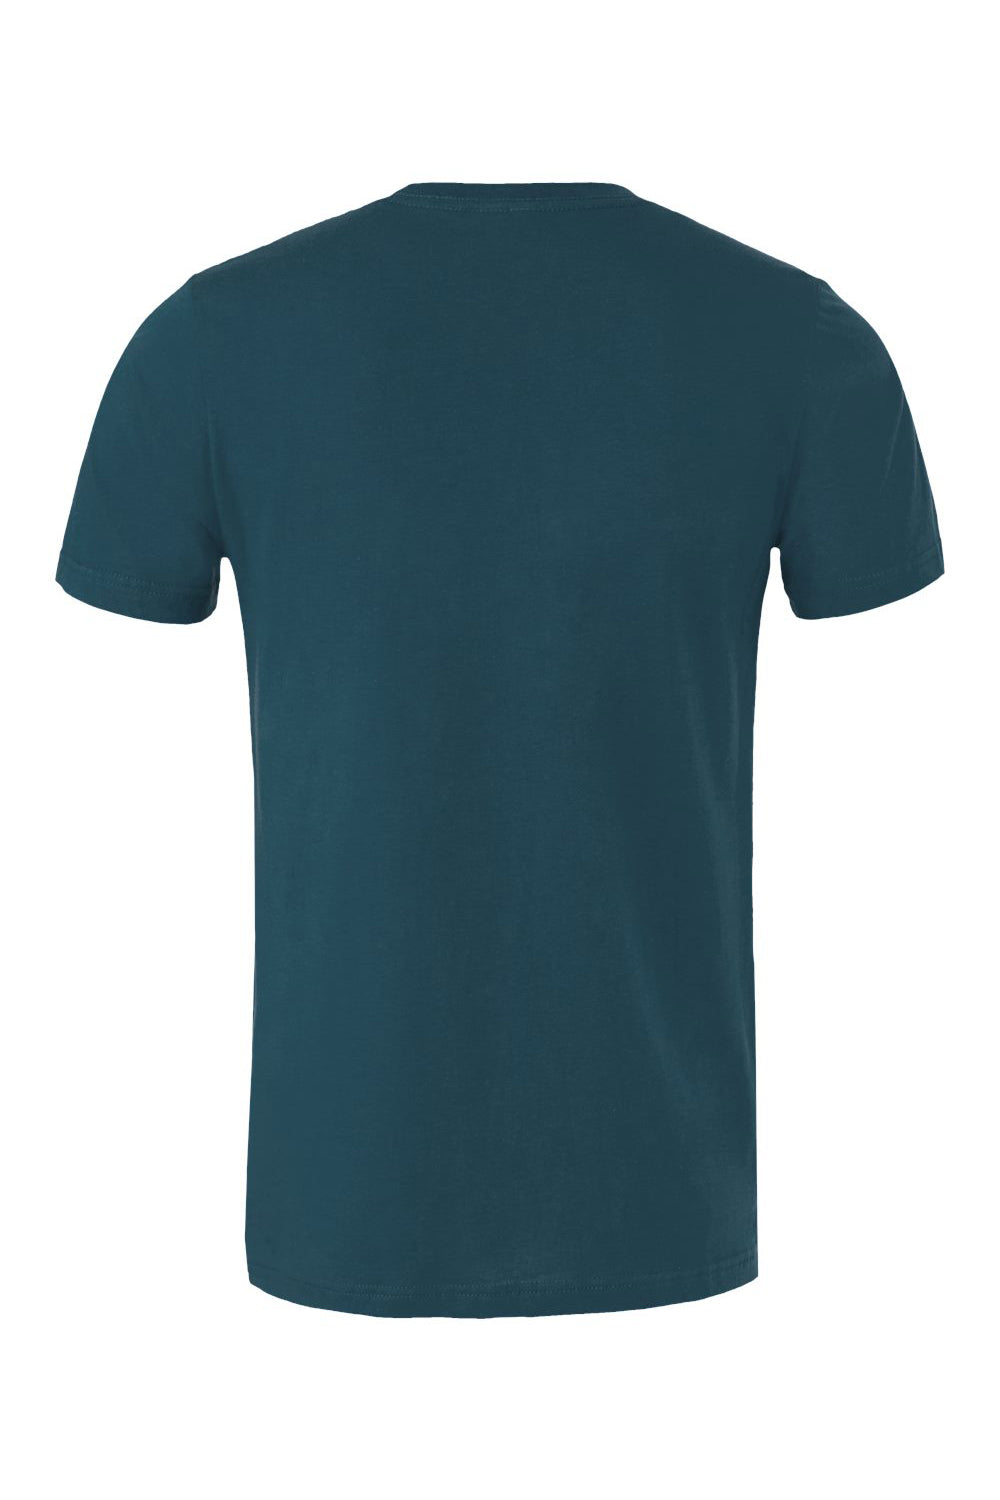 Bella + Canvas BC3001/3001C Mens Jersey Short Sleeve Crewneck T-Shirt Deep Teal Blue Flat Back